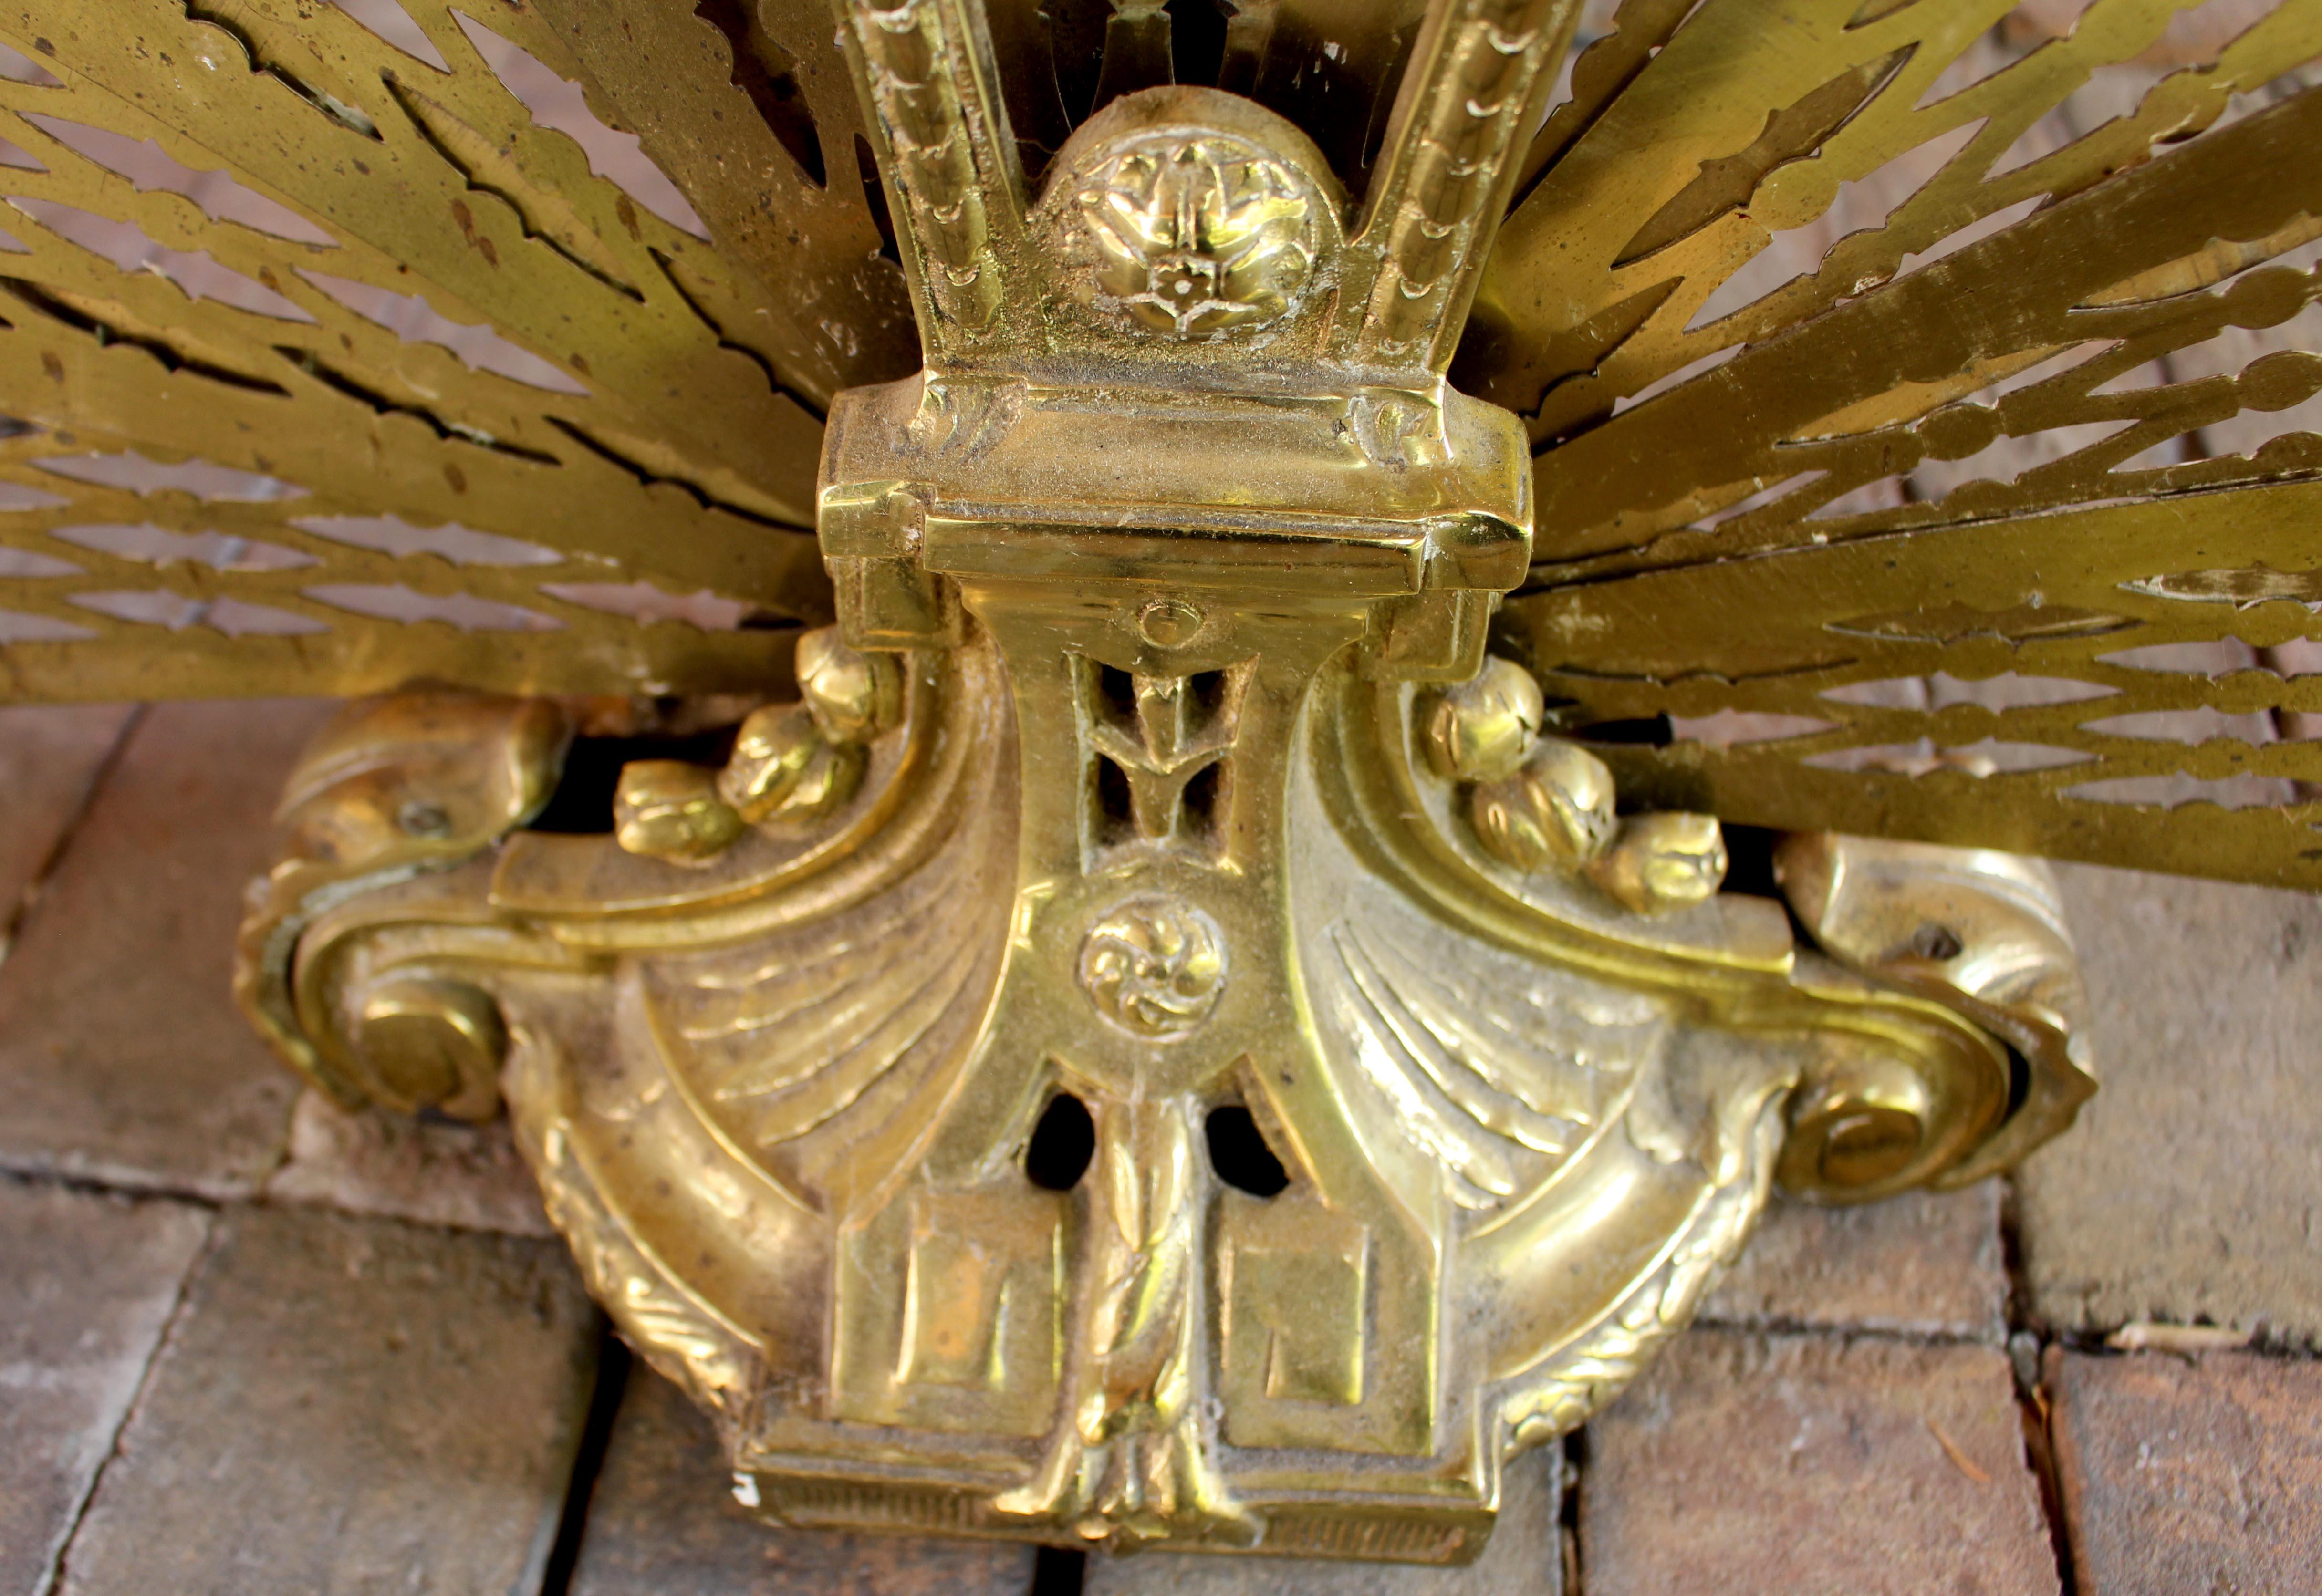 Early 20th Century Circa 1920s English or European Brass Fireplace Fan